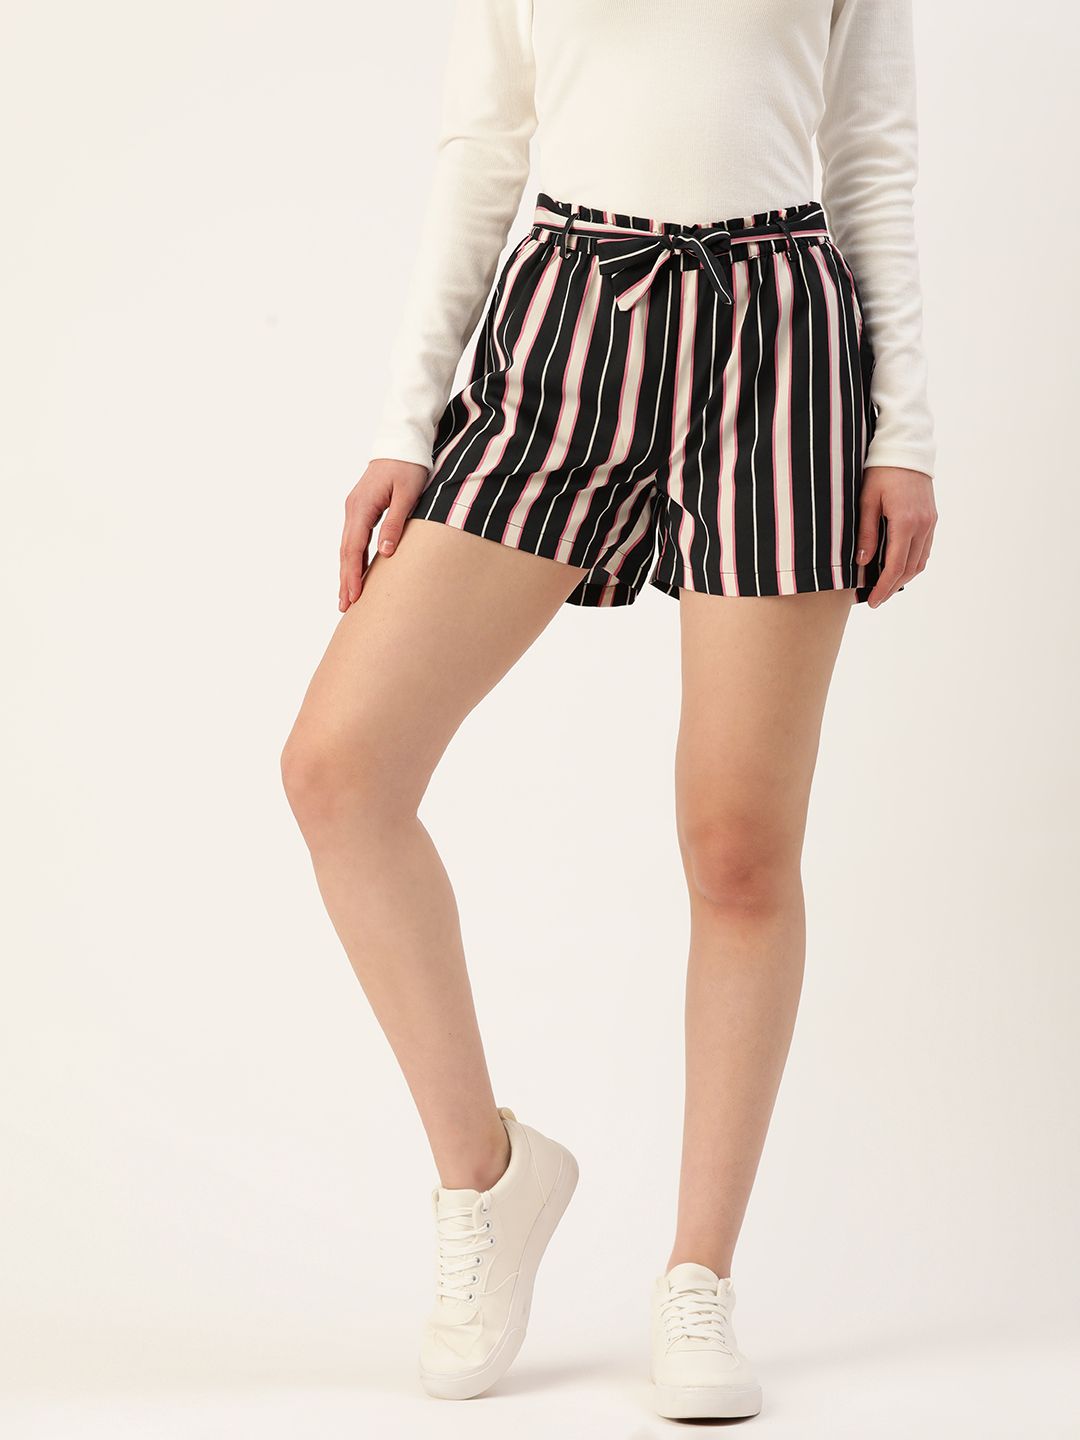 WISSTLER Striped Regular Fit Shorts Price in India